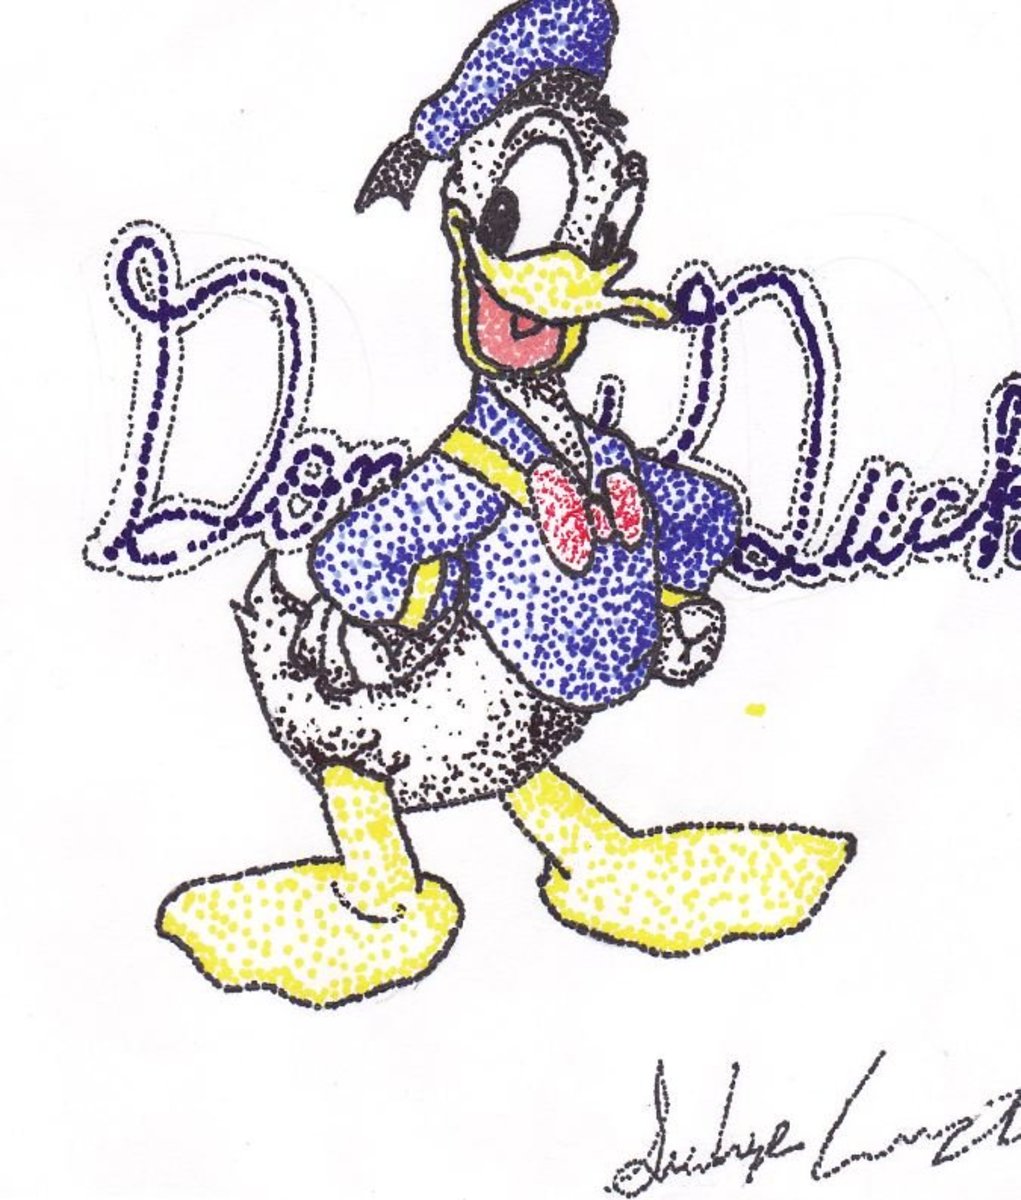 This was my first pointillism piece: Donald Duck!